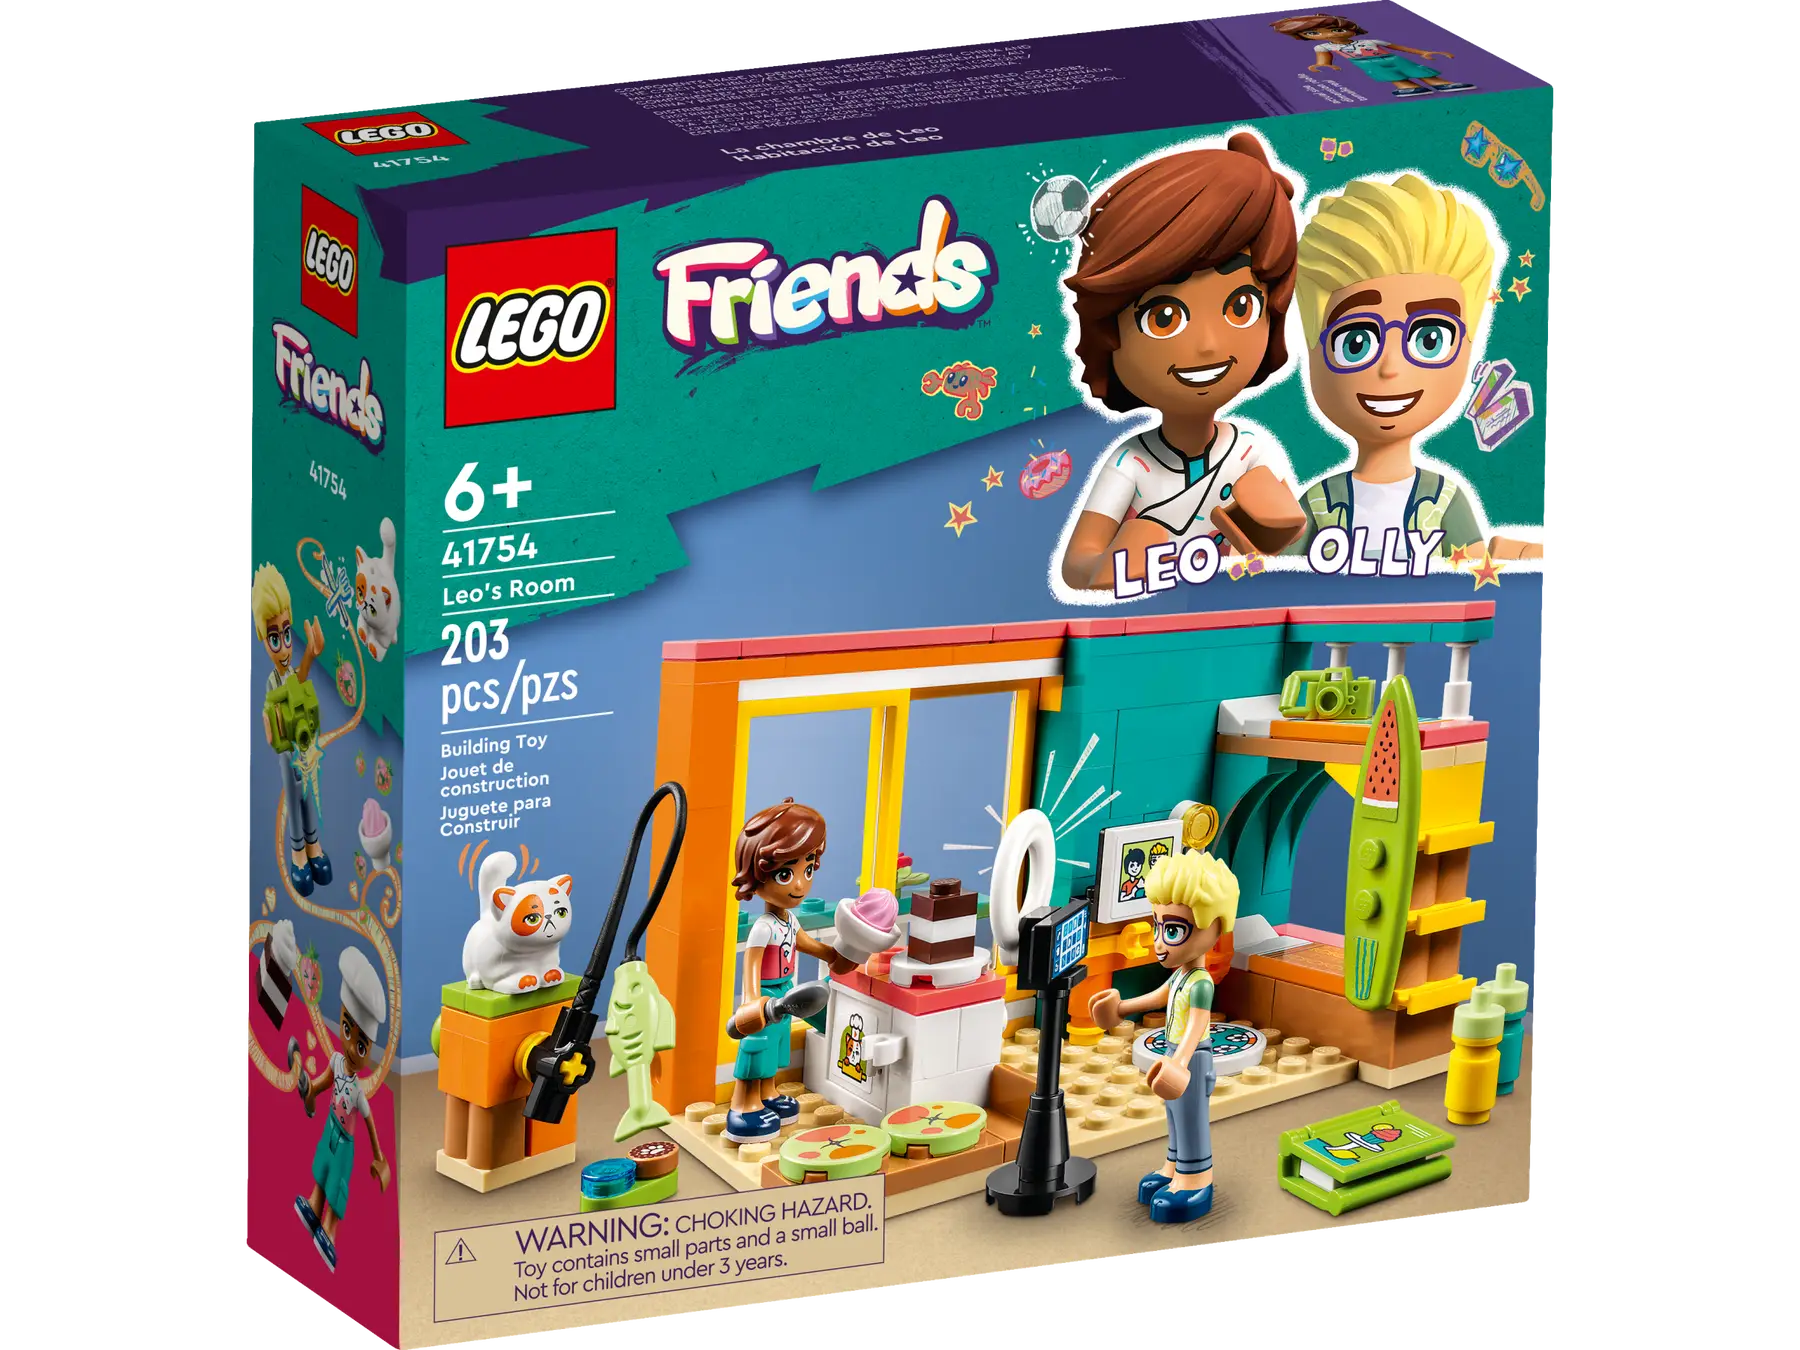 Lego Friends - Leo's Room